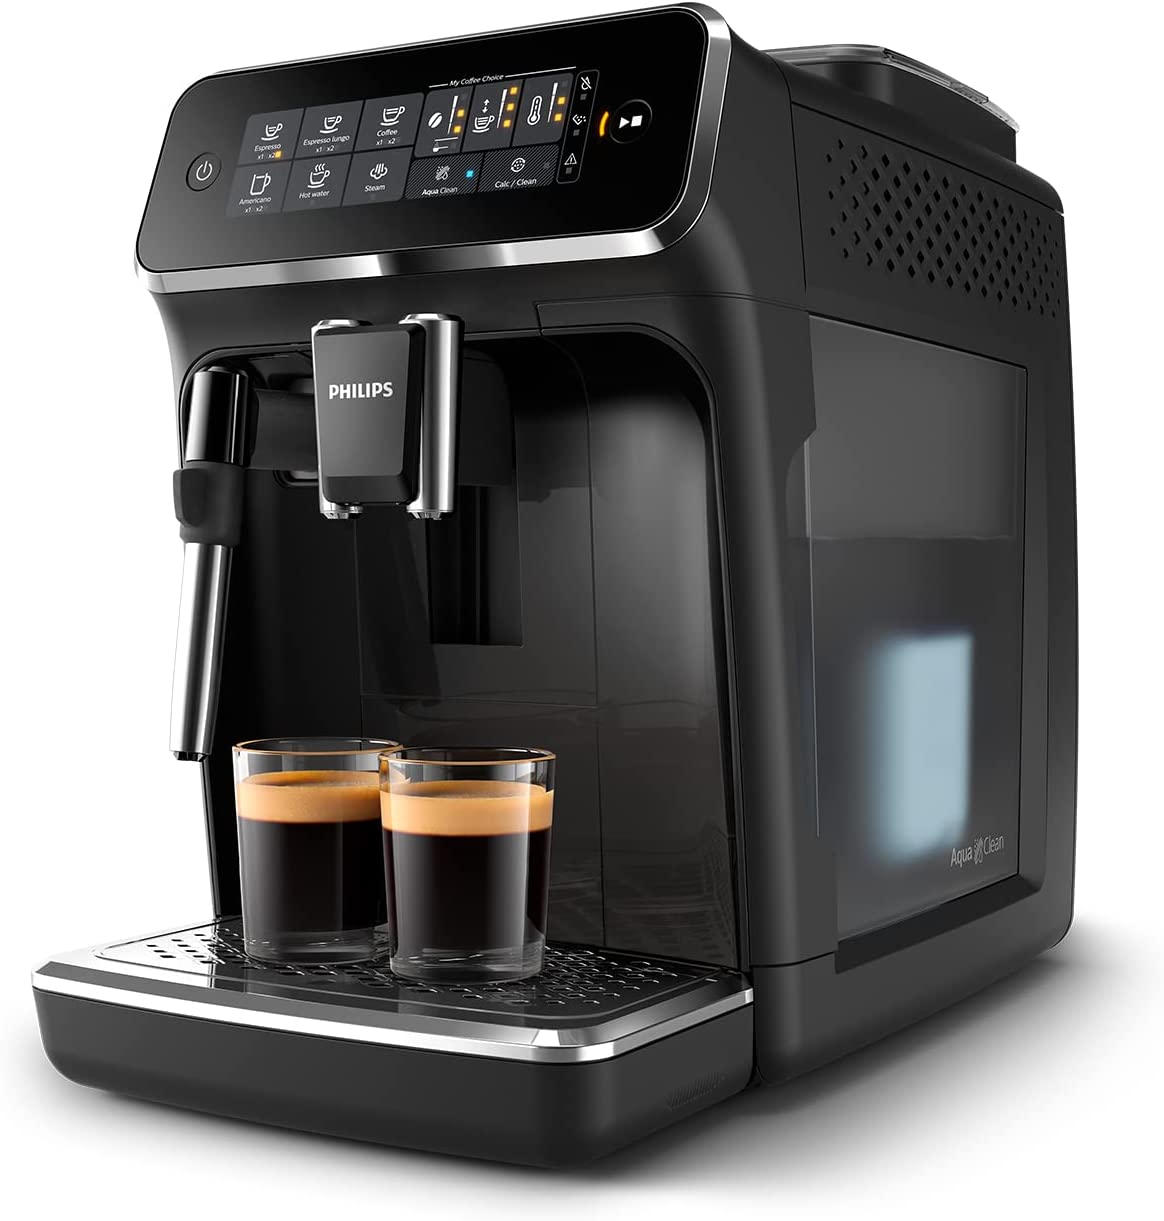 PHILIPS 3200 Series Fully Automatic Espresso Machine w/LatteGo, Black, EP3241/54